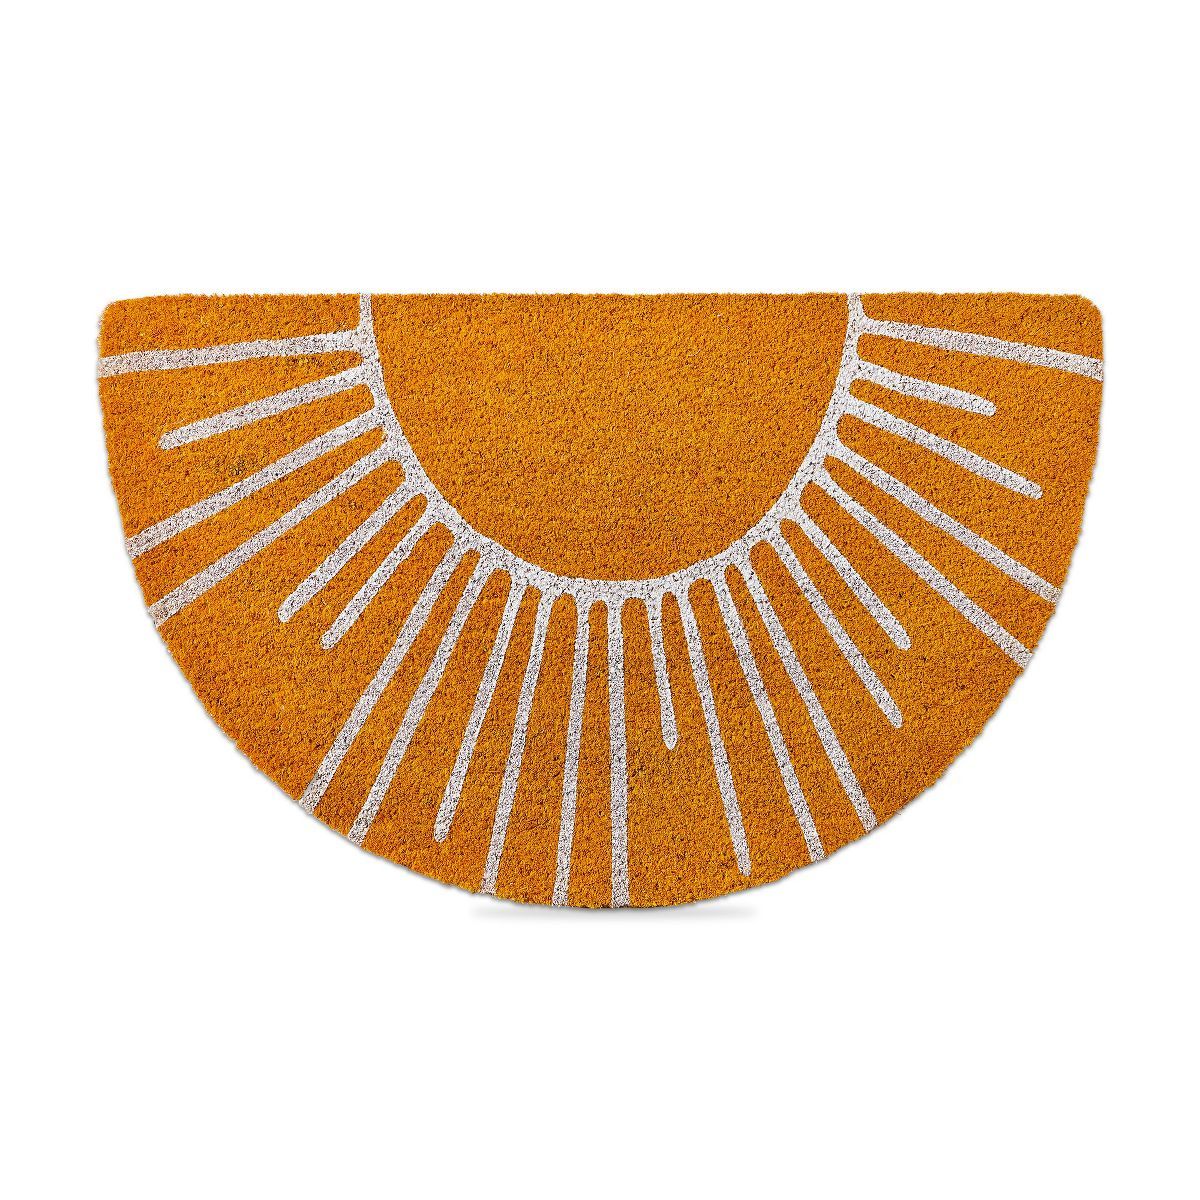 tagltd 1'6"X2'6" Sunshine Shaped Coir Doormat | Target